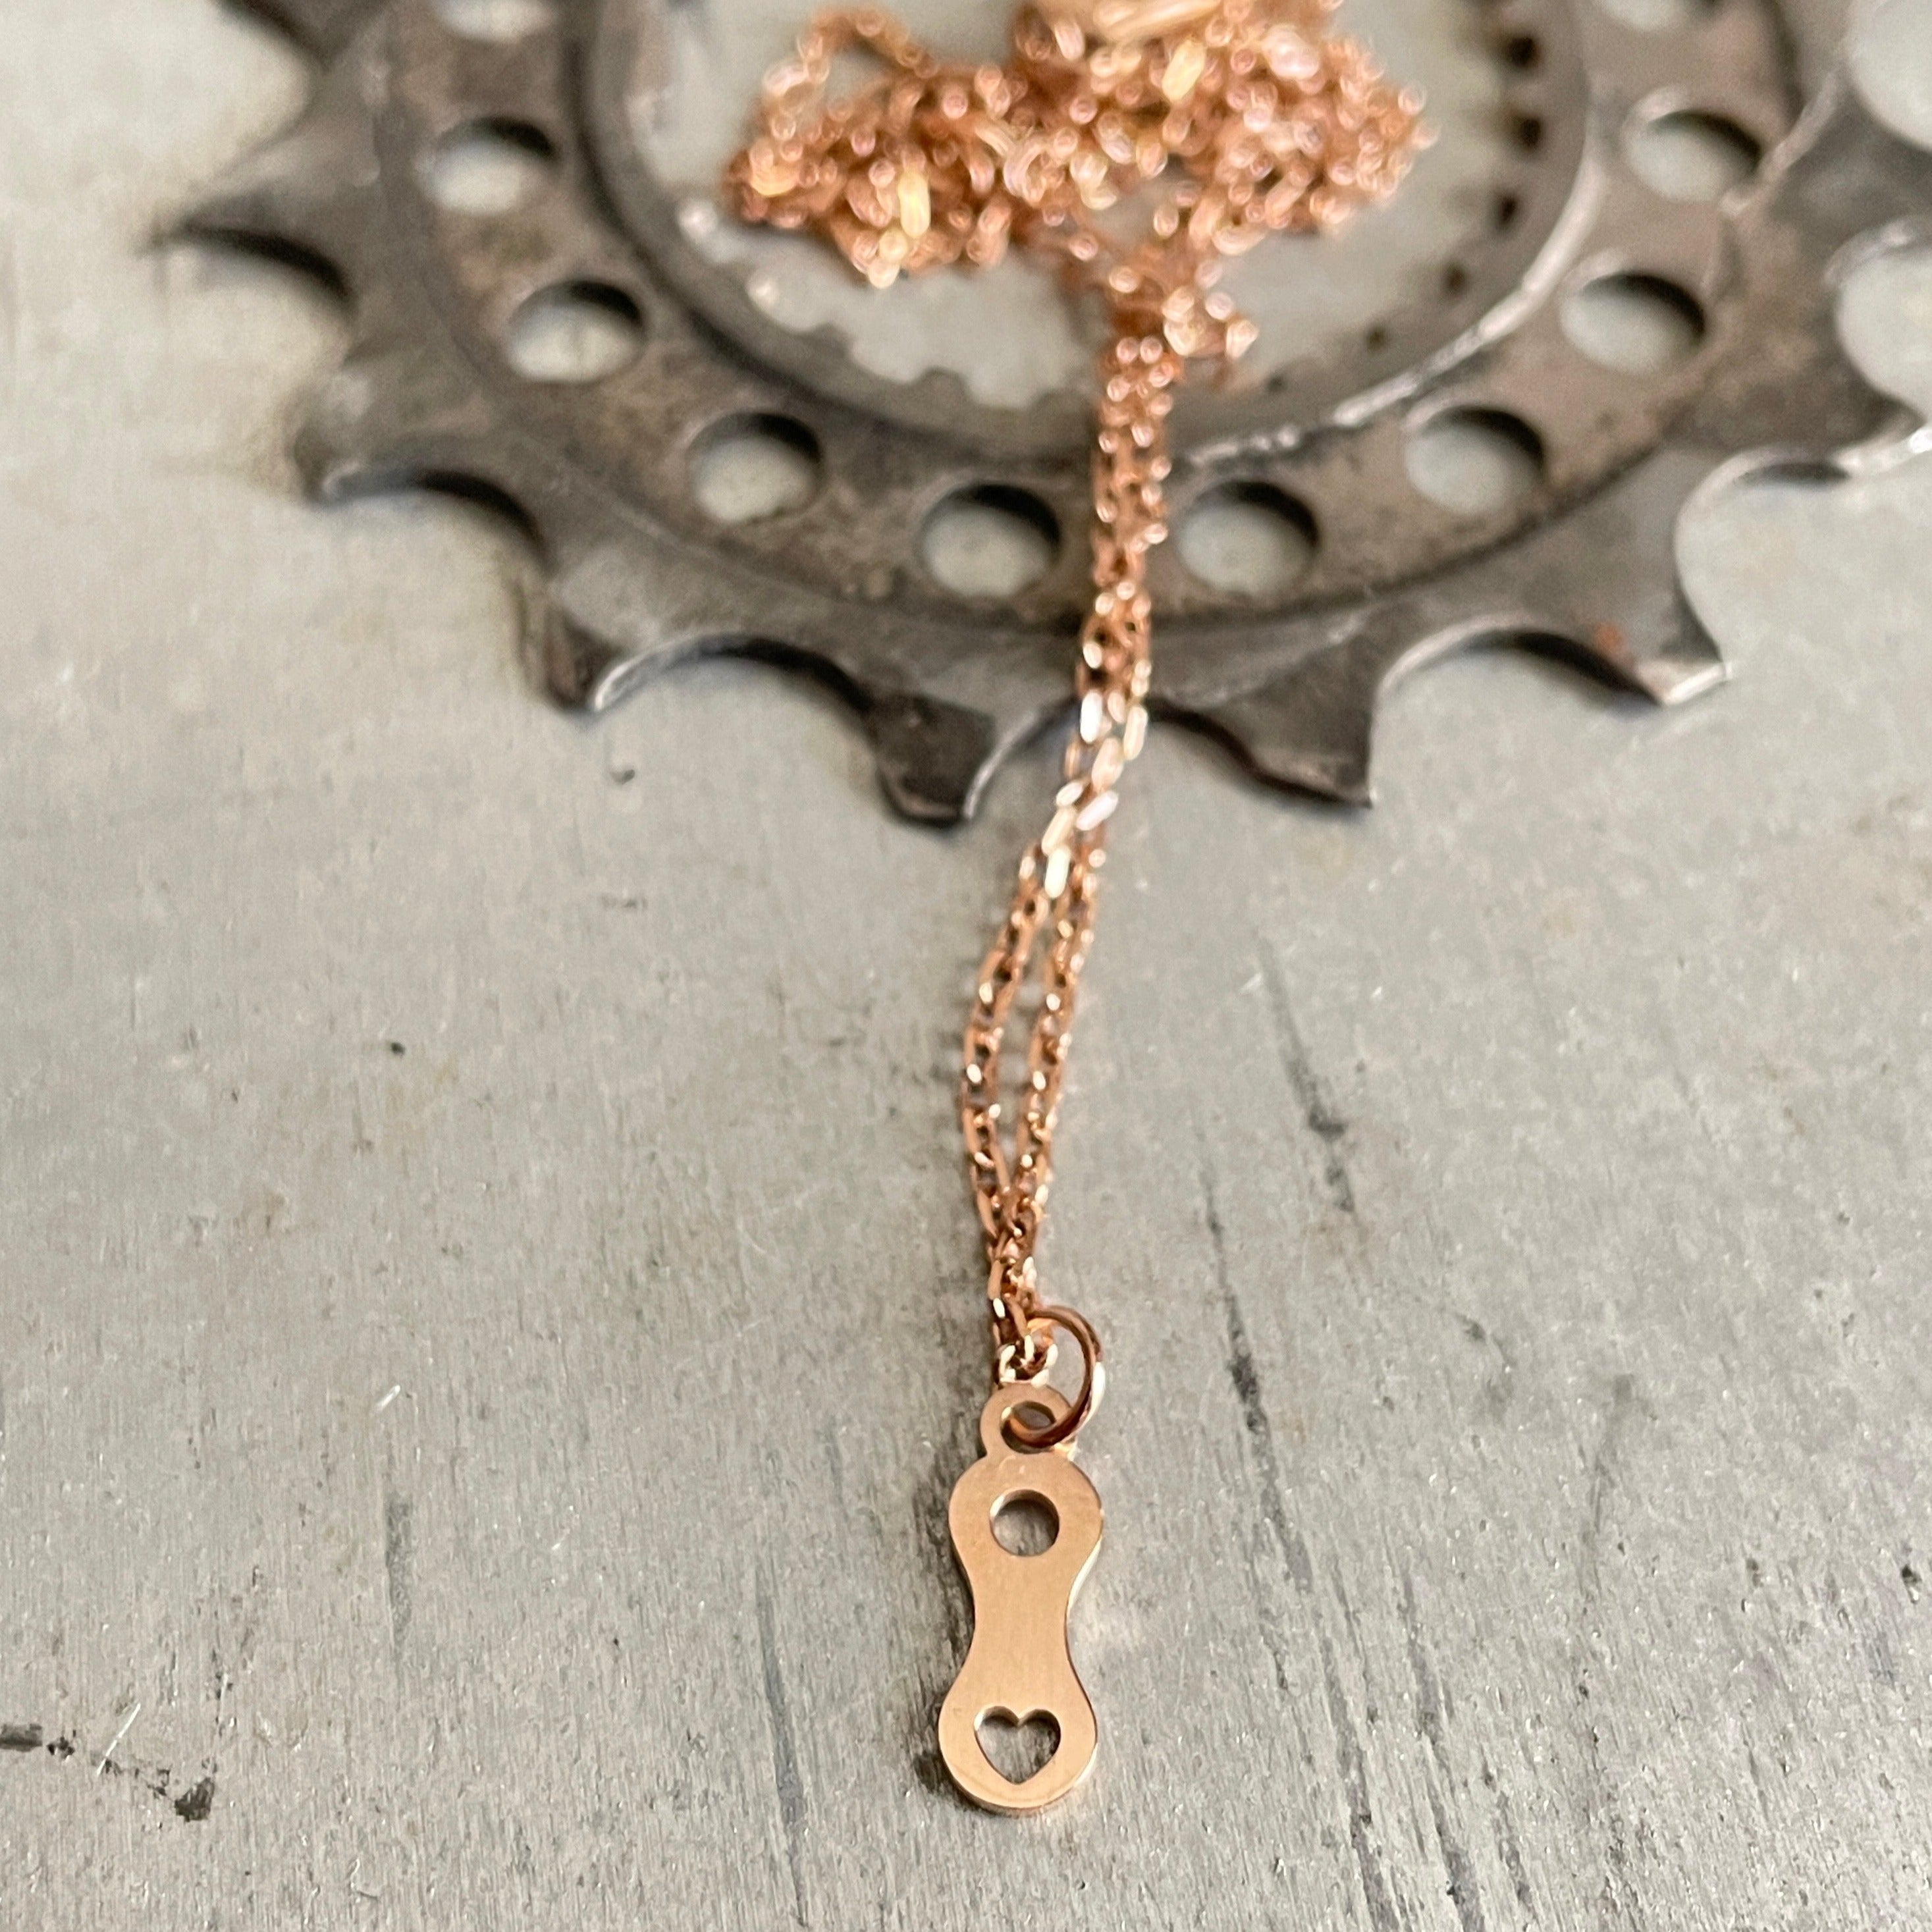 Rustic Antique Brass Bronze Color Cable Chain Necklace 18